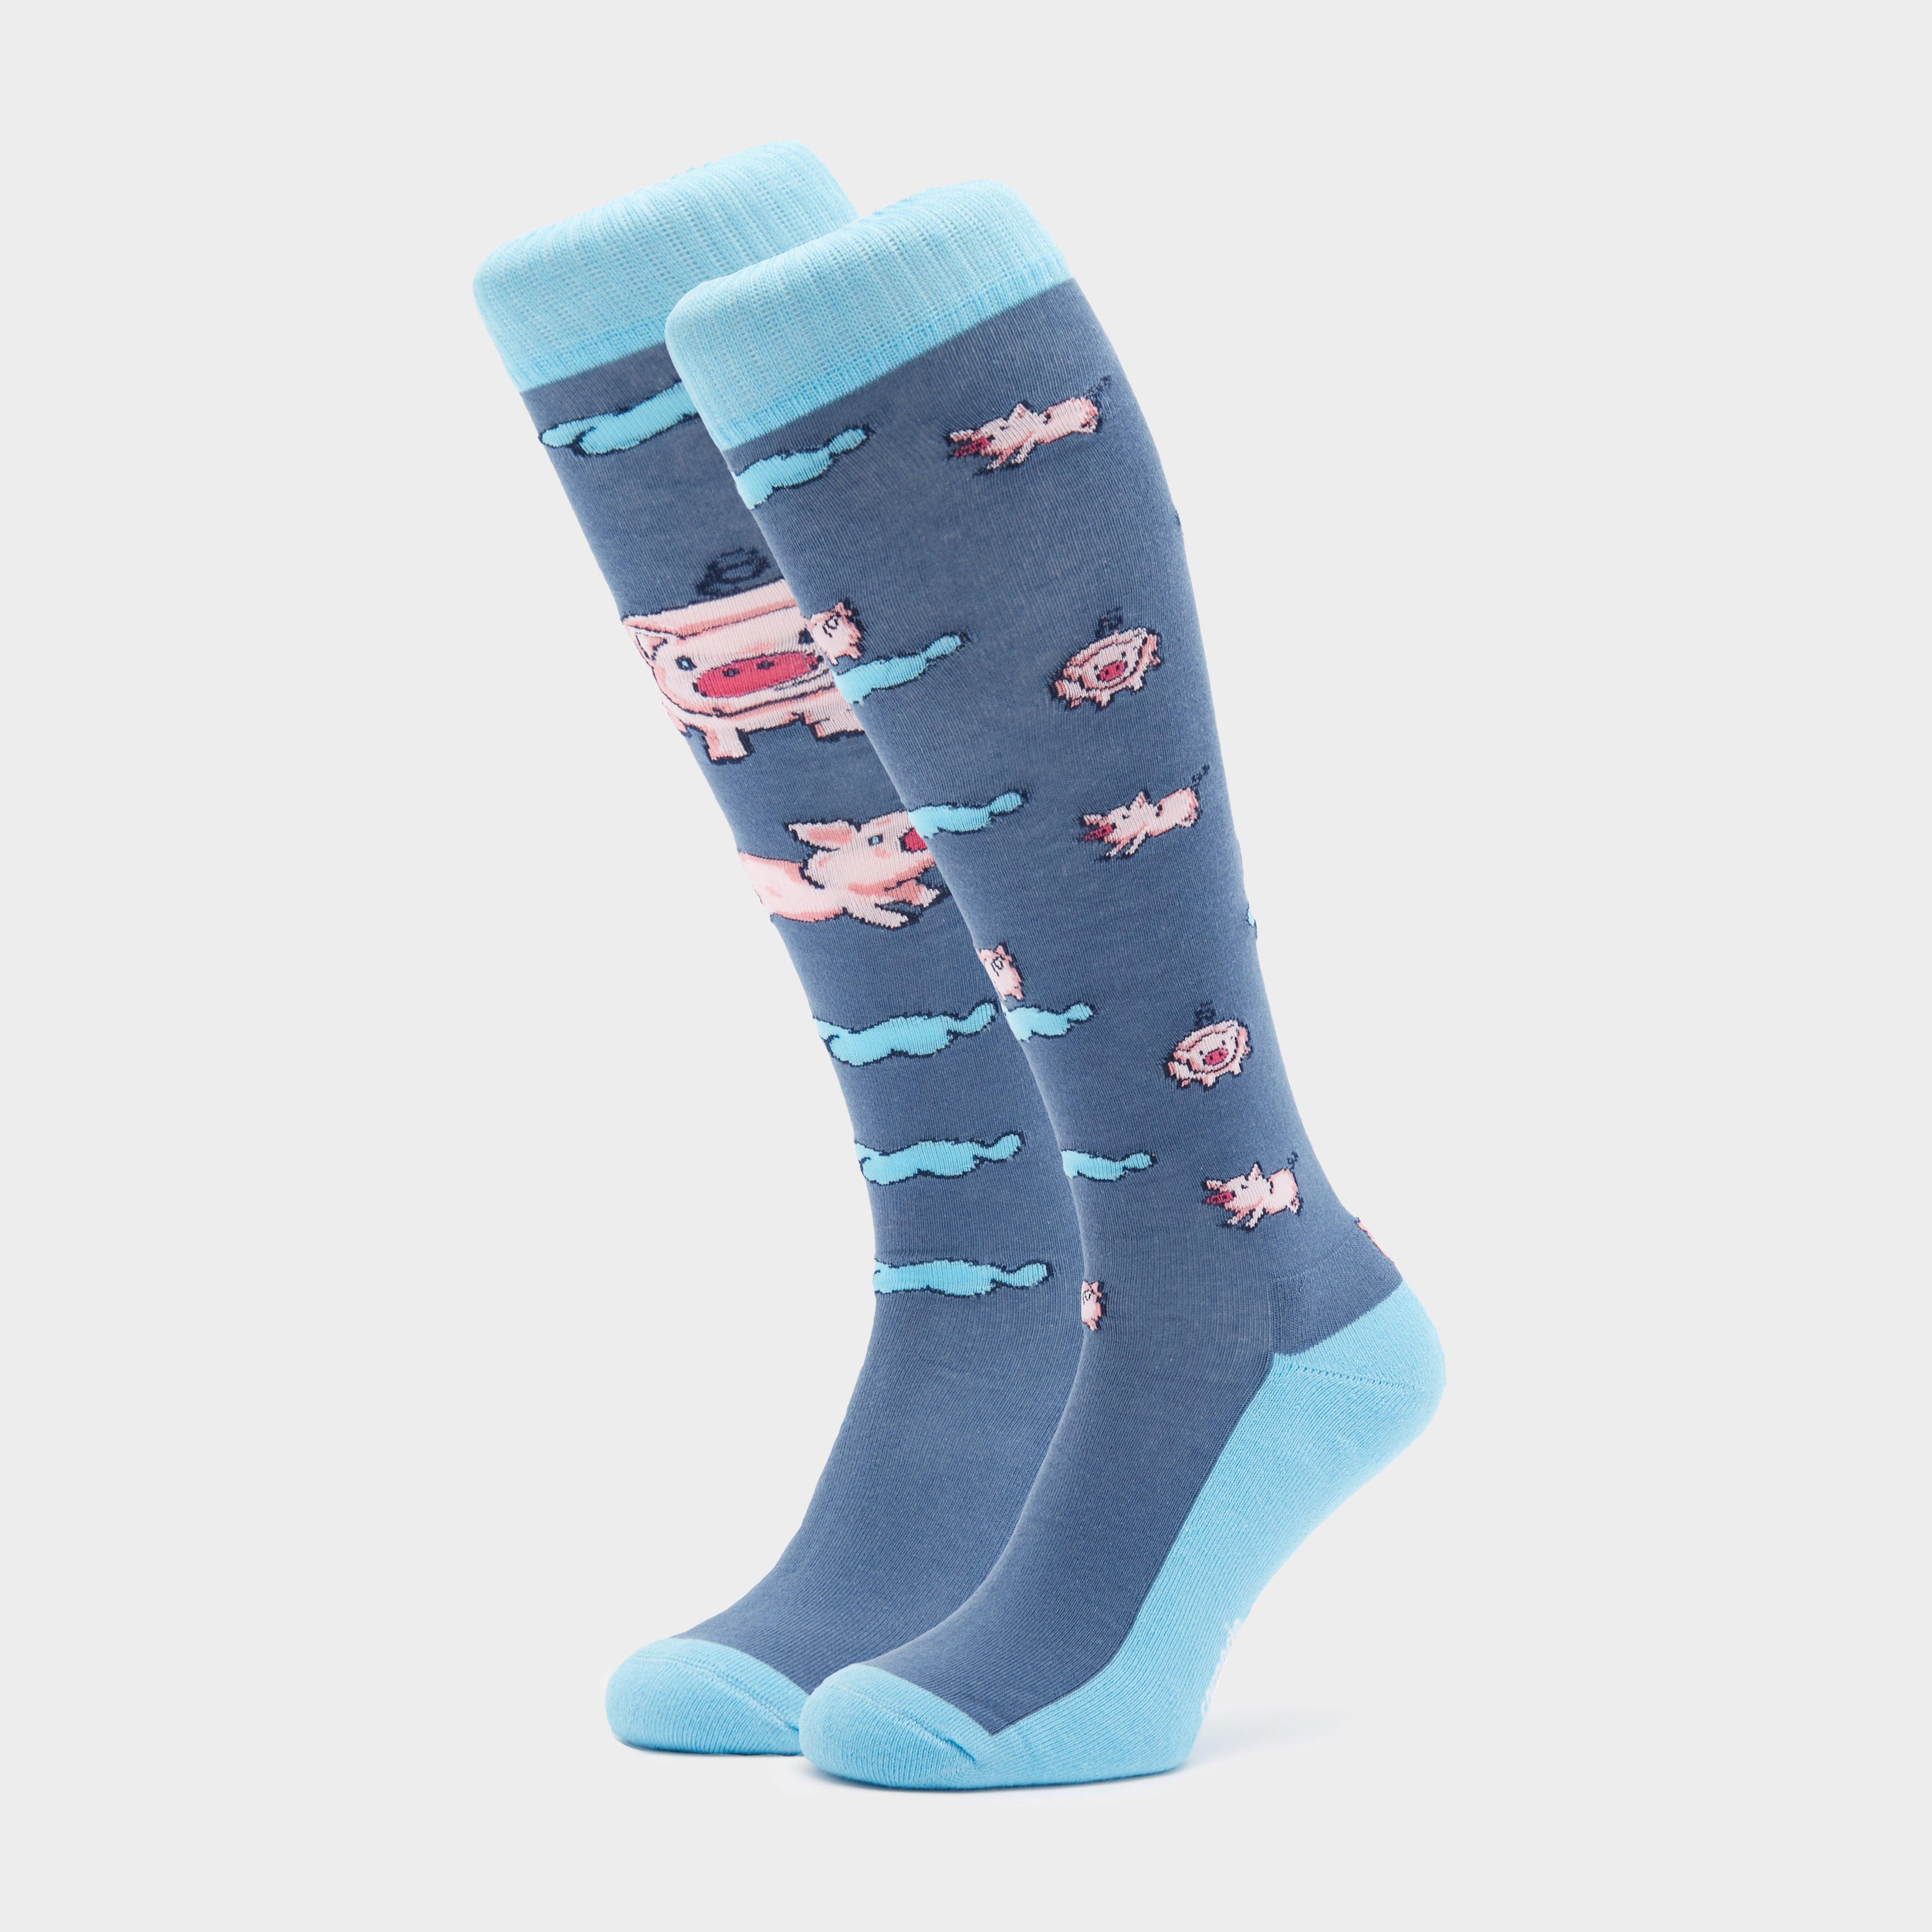 Comodo Adults Novelty Fun Socks Pigs - Blue/blue  Blue/blue